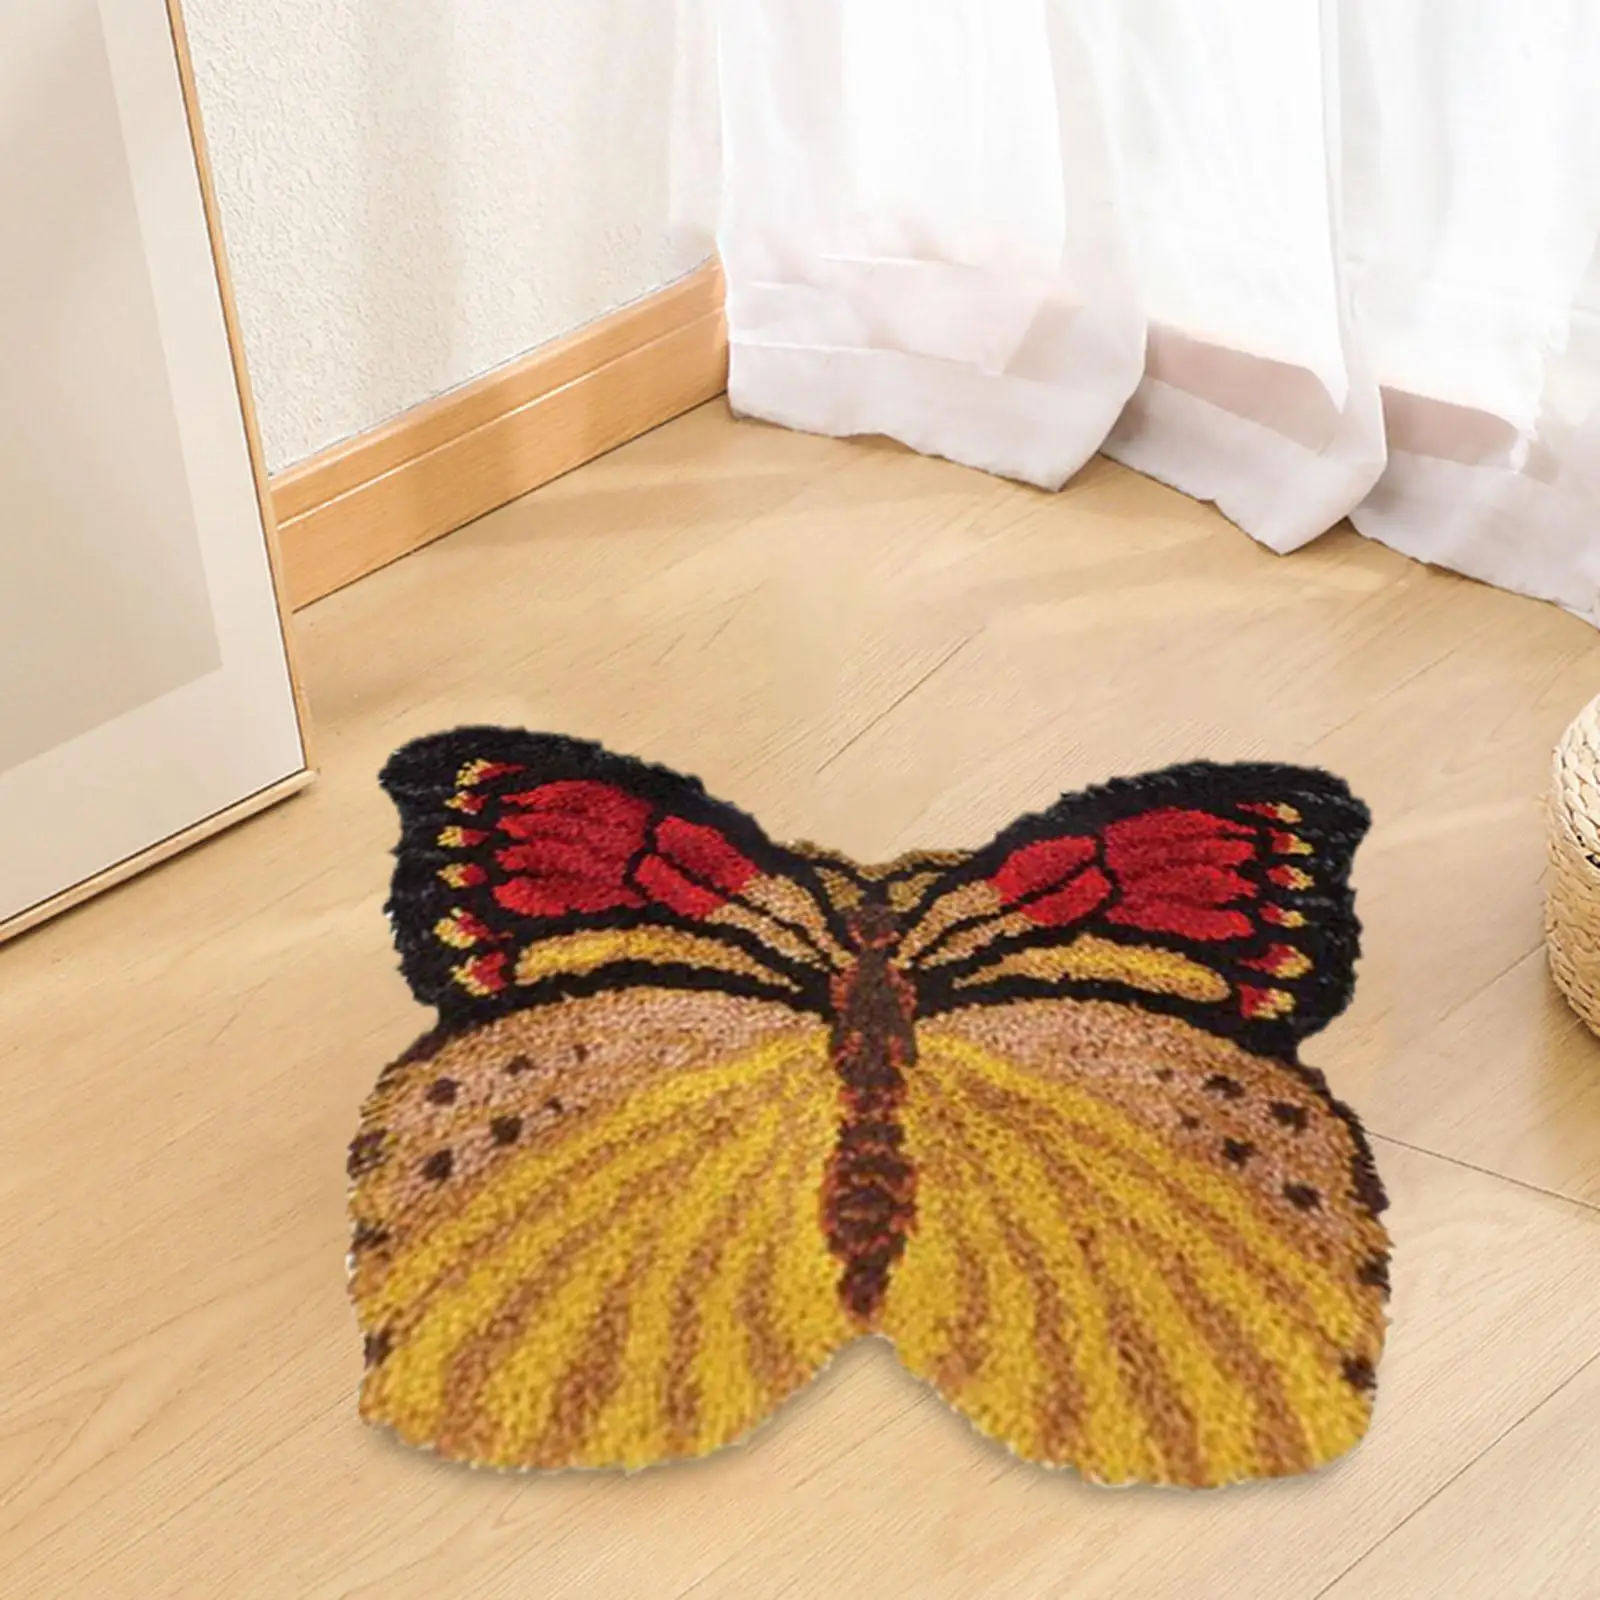 Latch Hook Rug Kit Butterfly Pattern Embroidery Carpet Making Set DIY Rug Needlework Latch Hooking Rug Kits Home Decor